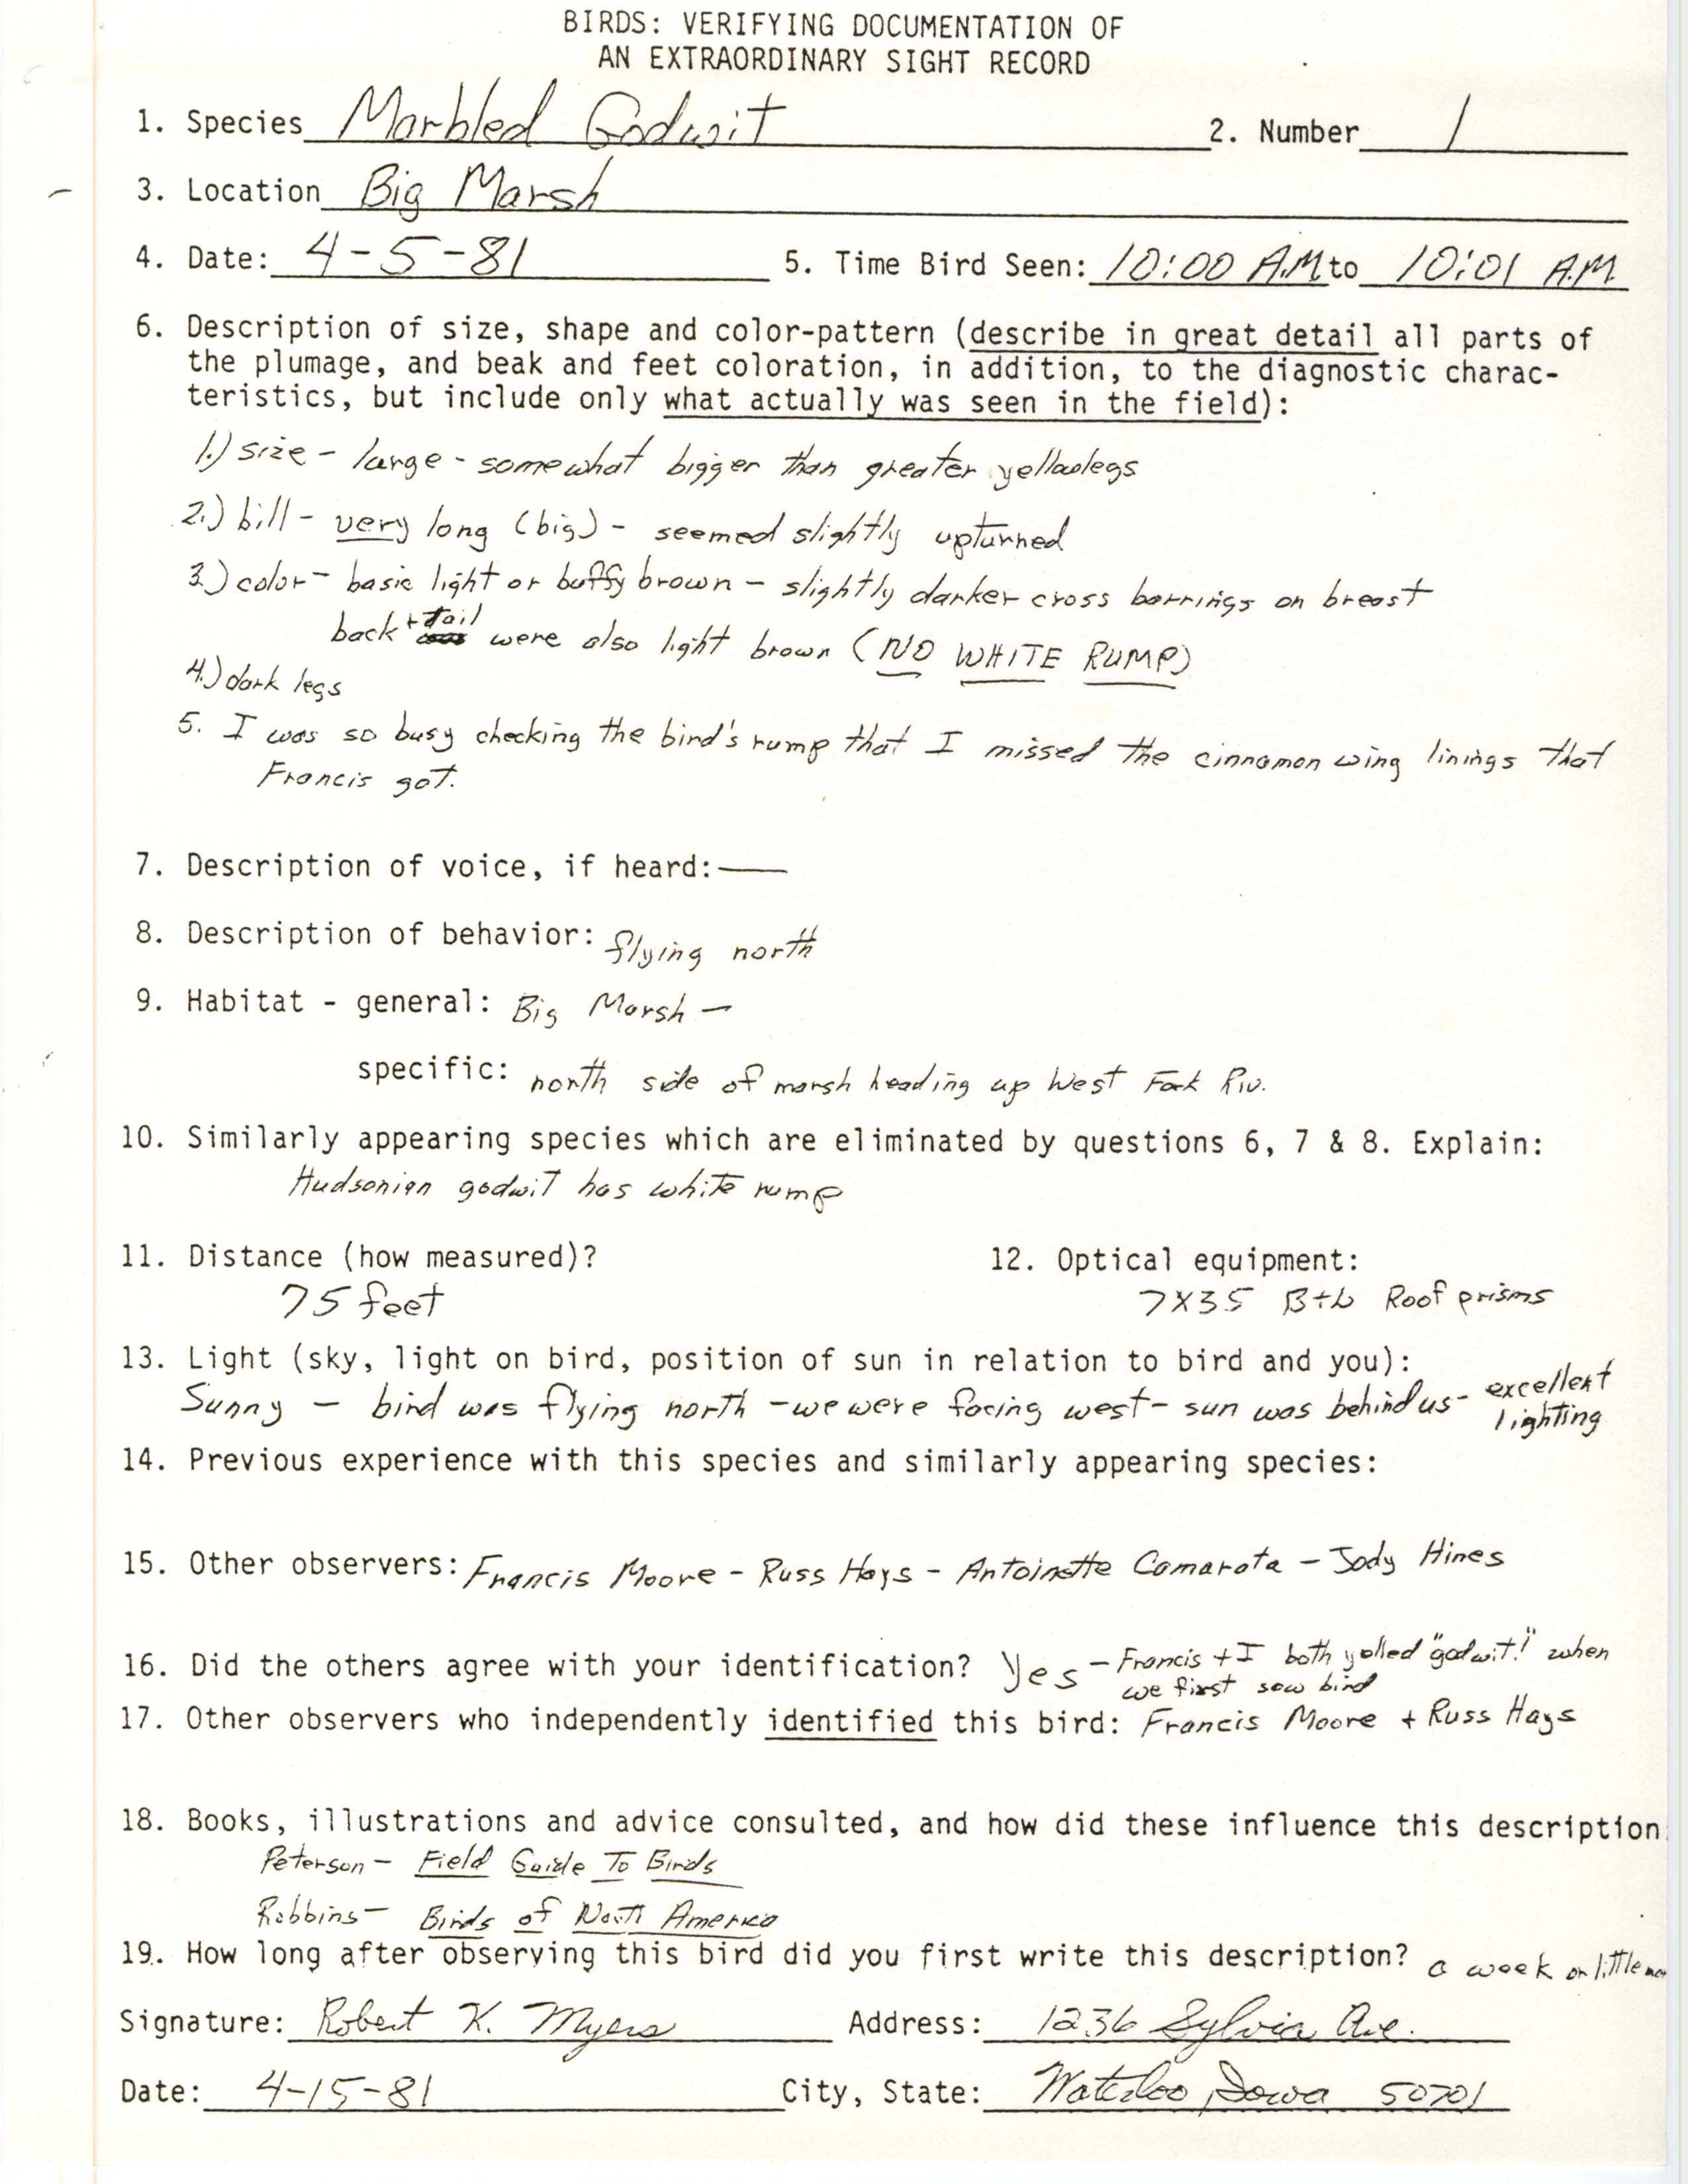 Rare bird documentation form for Marbled Godwit at Big Marsh in 1981